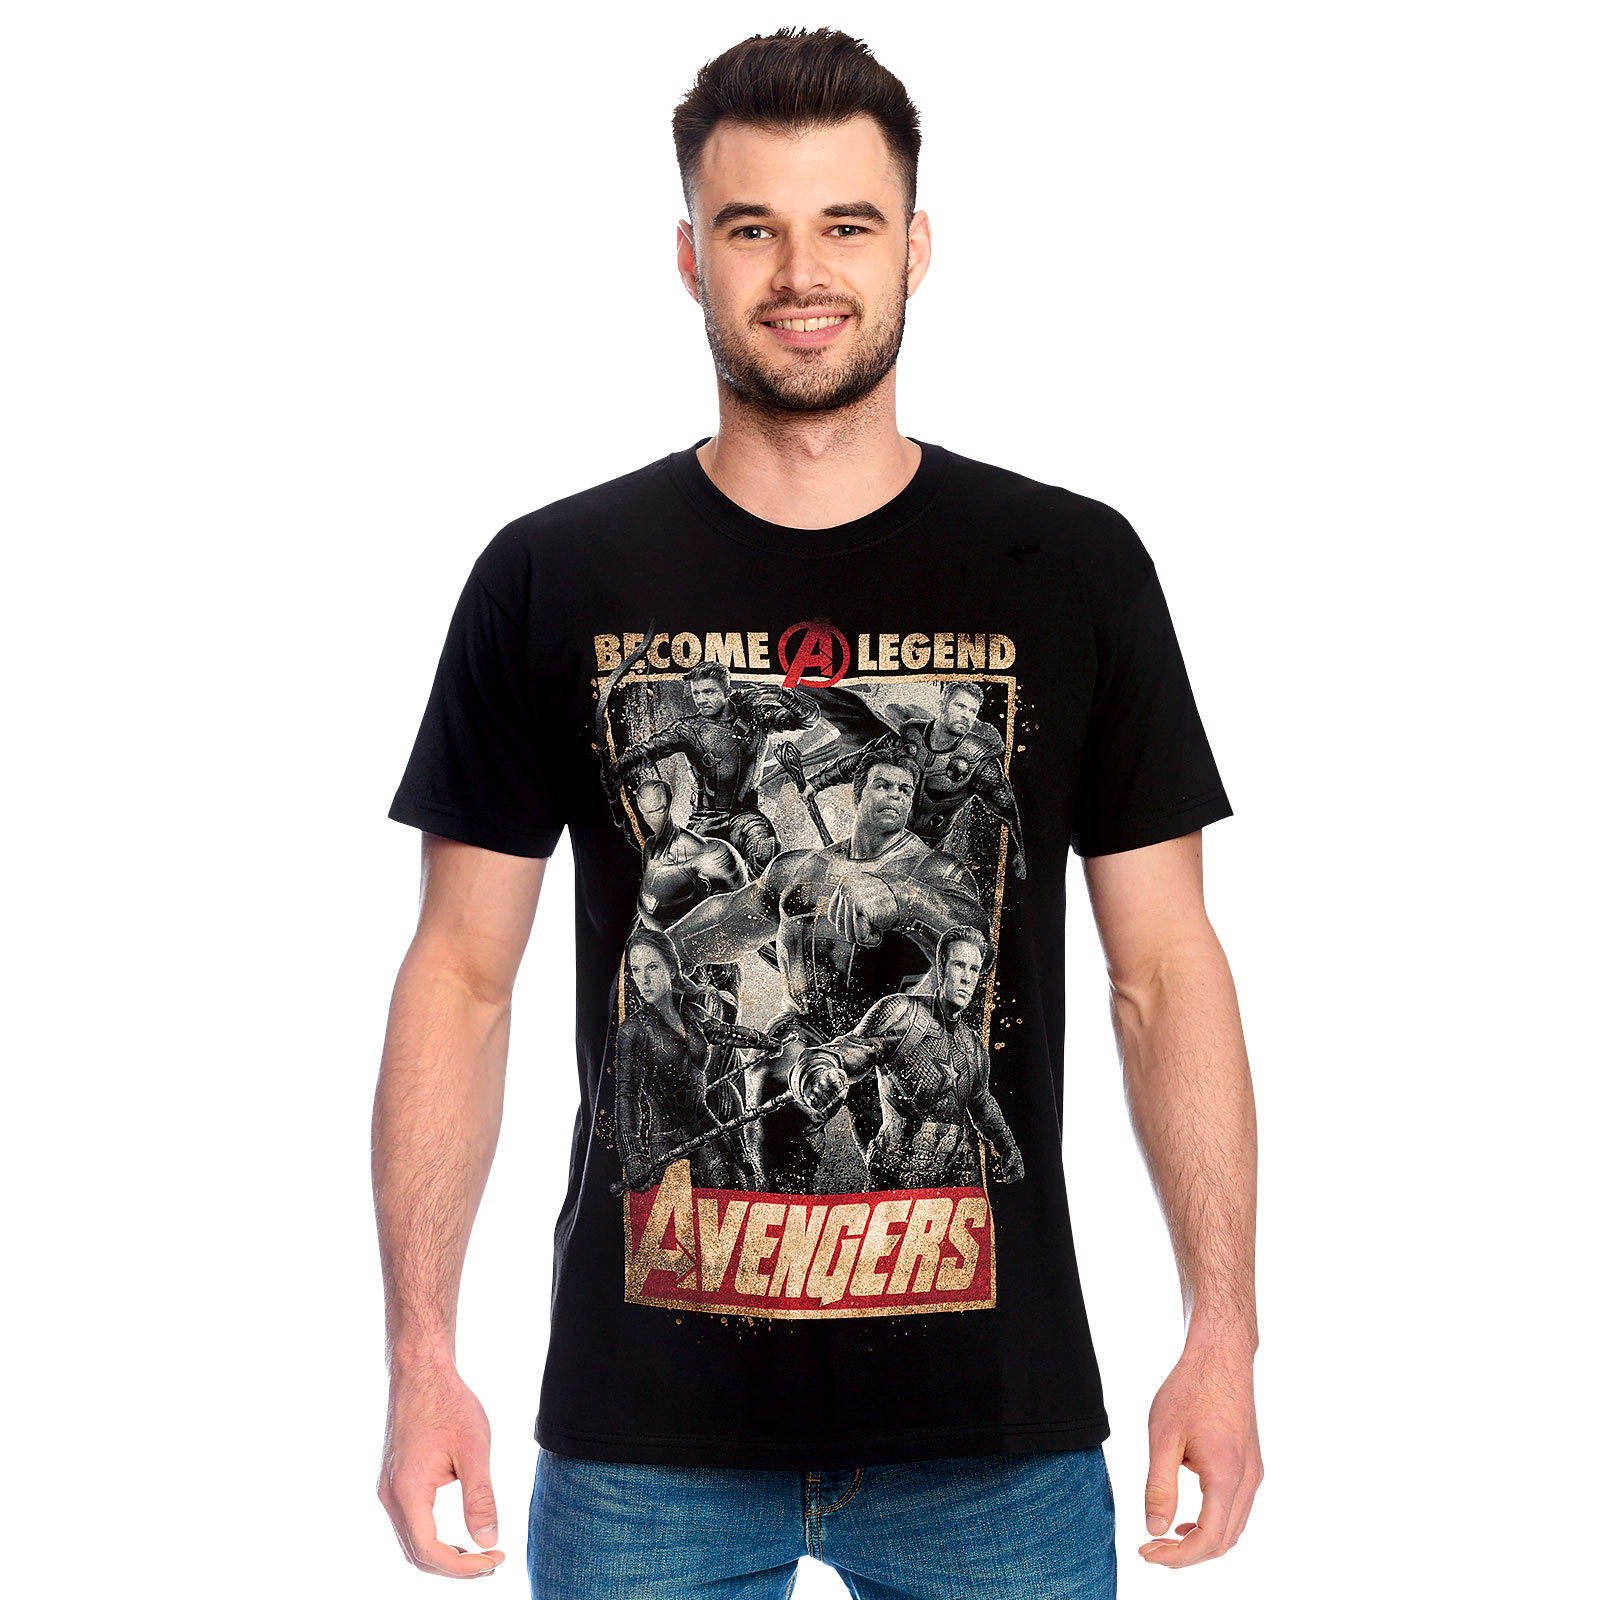 Avengers - Become A Legend Poster T-Shirt black